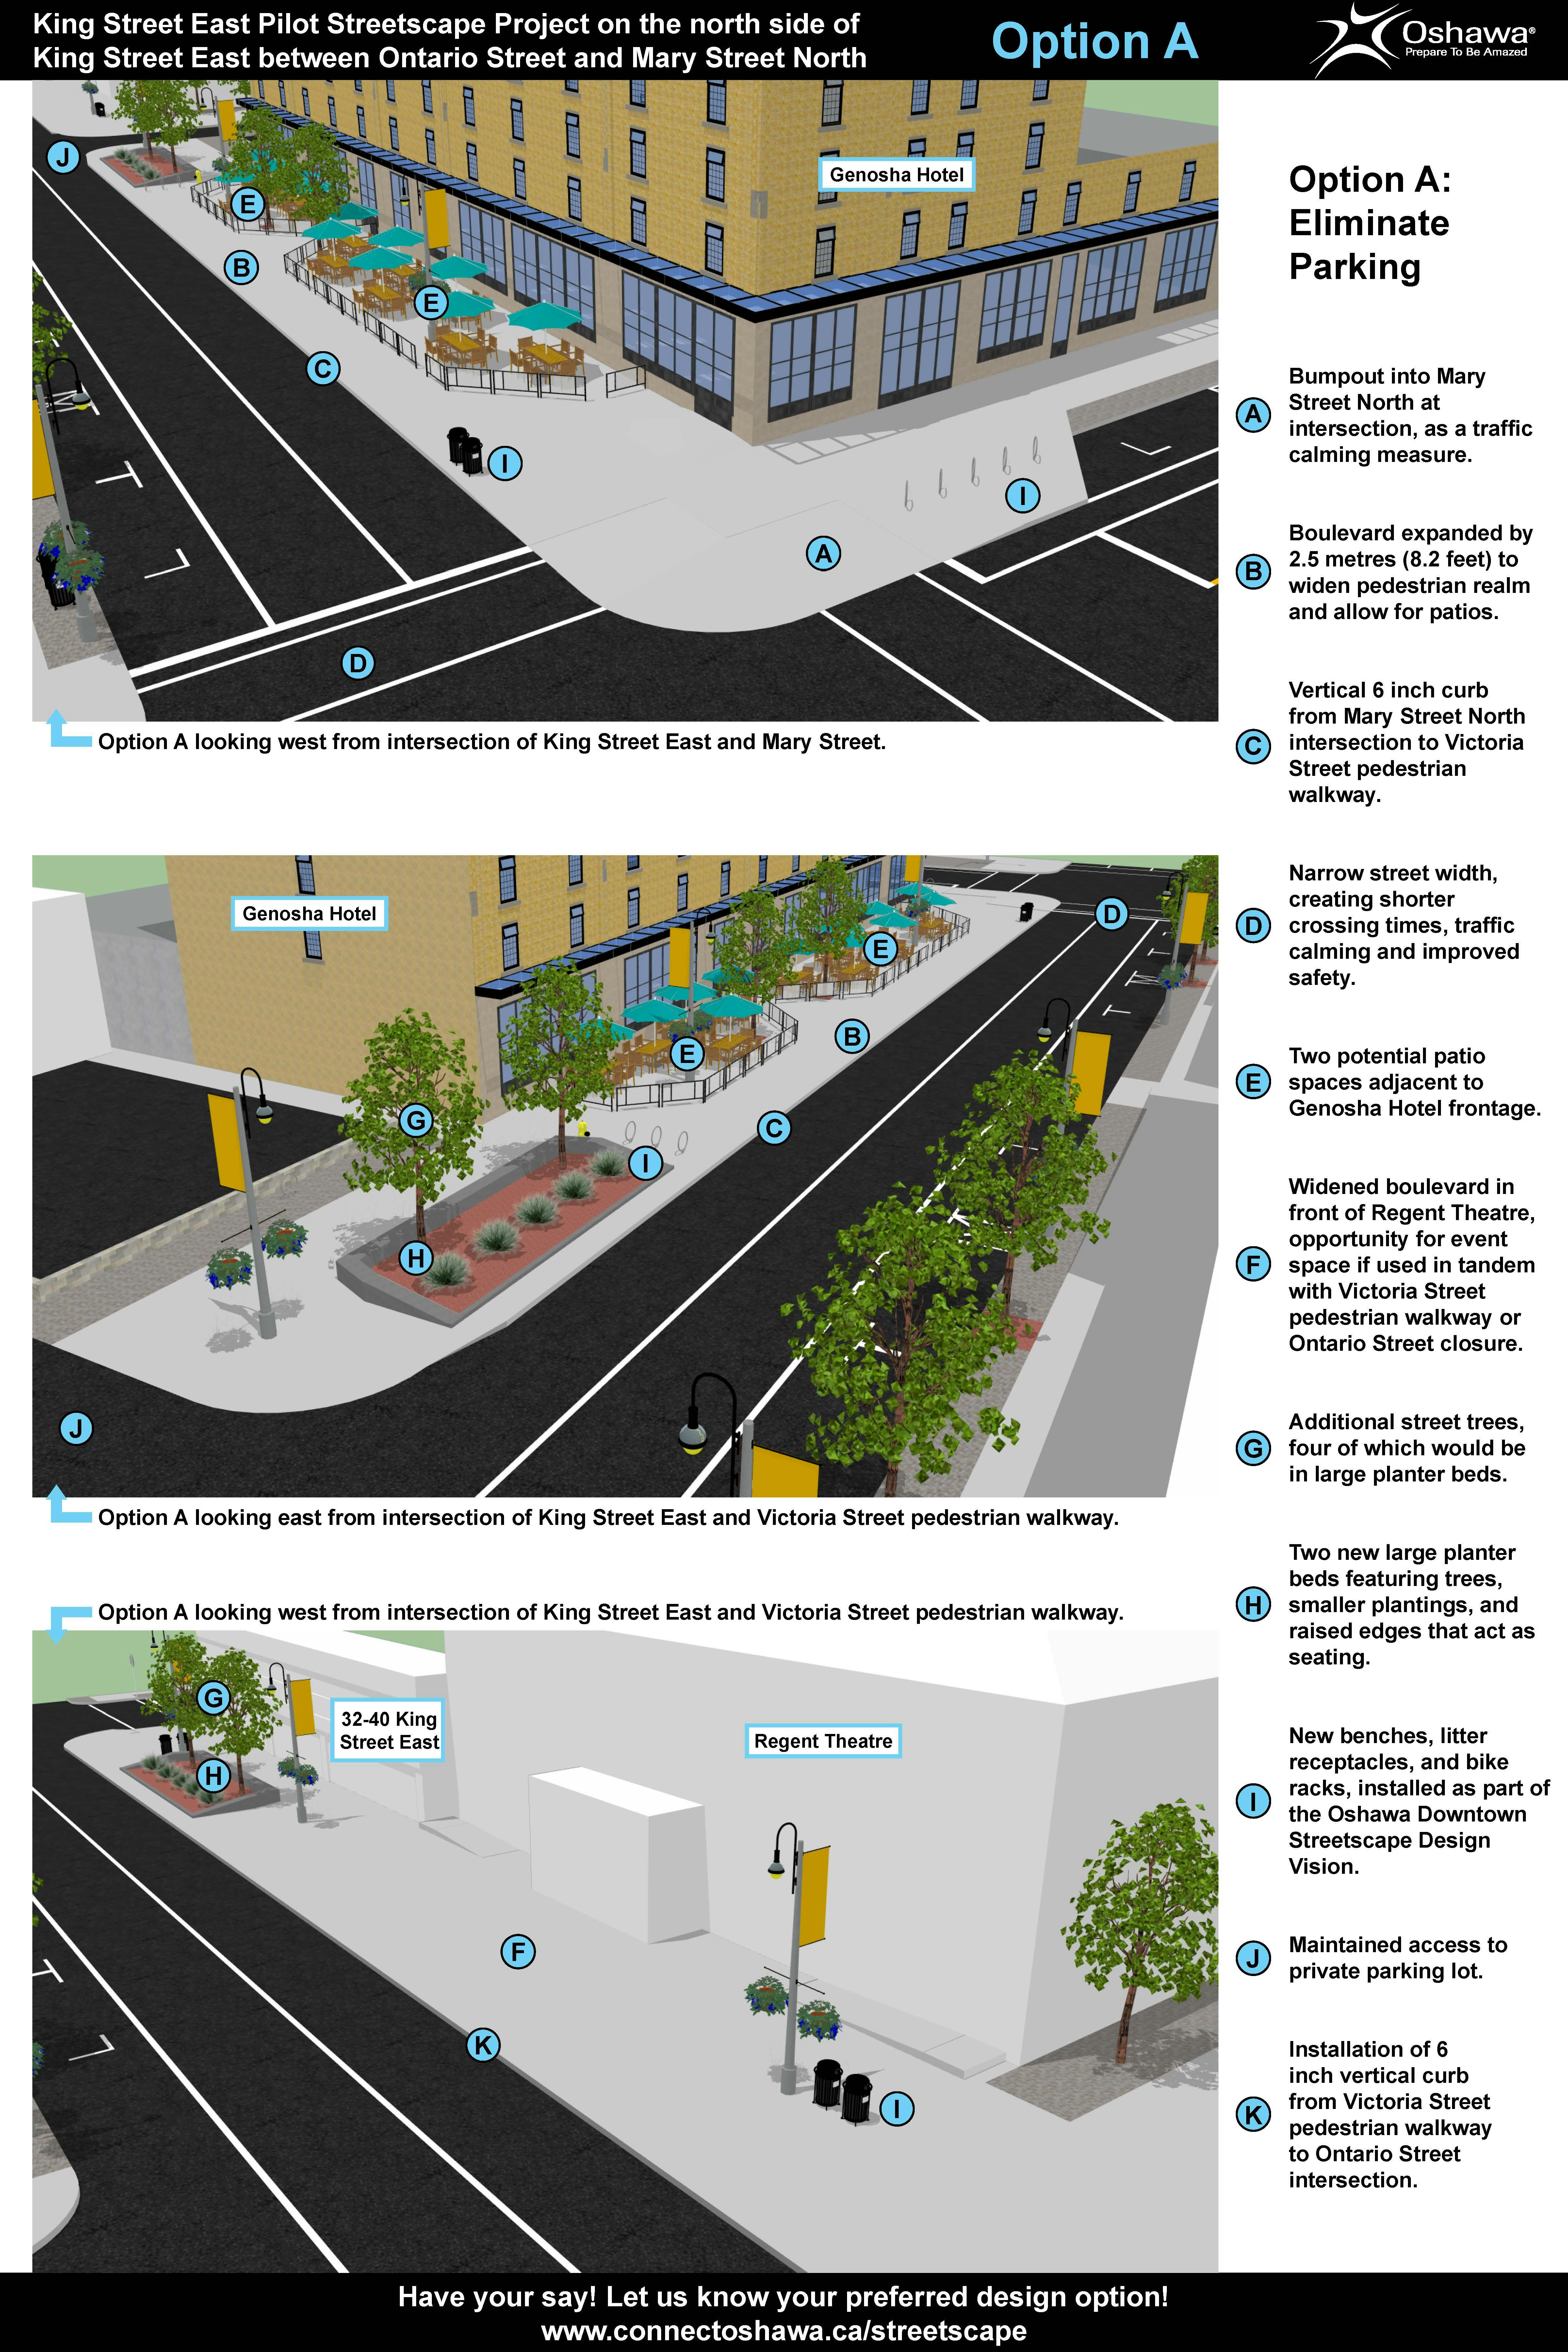 Option A (No Parking): King Street East Pilot streetscape project